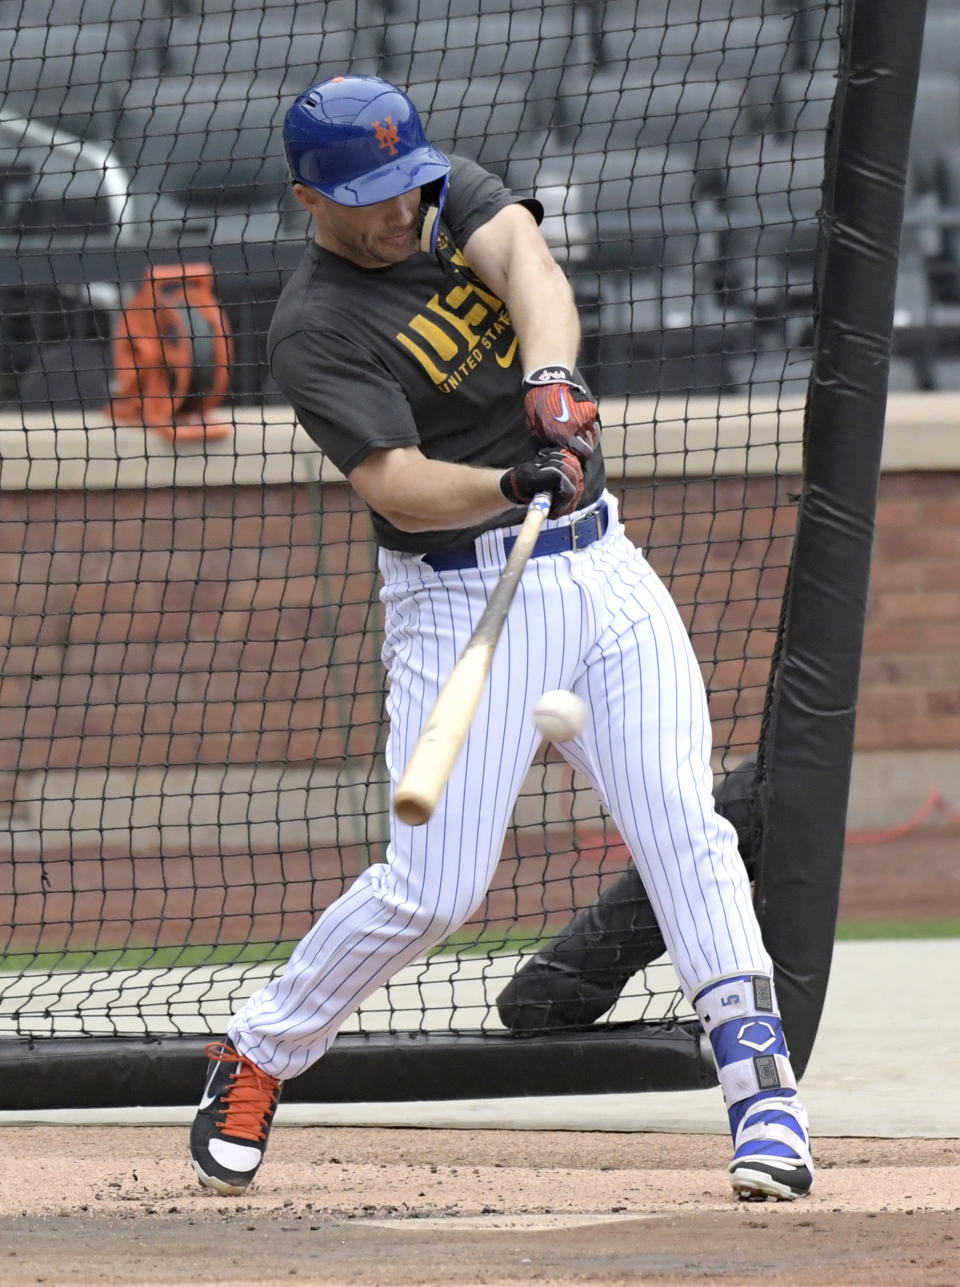 New York Mets' David Wright bats during a simulated baseball game Saturday, Sept. 8, 2018, in New York. (AP Photo/Bill Kostroun)